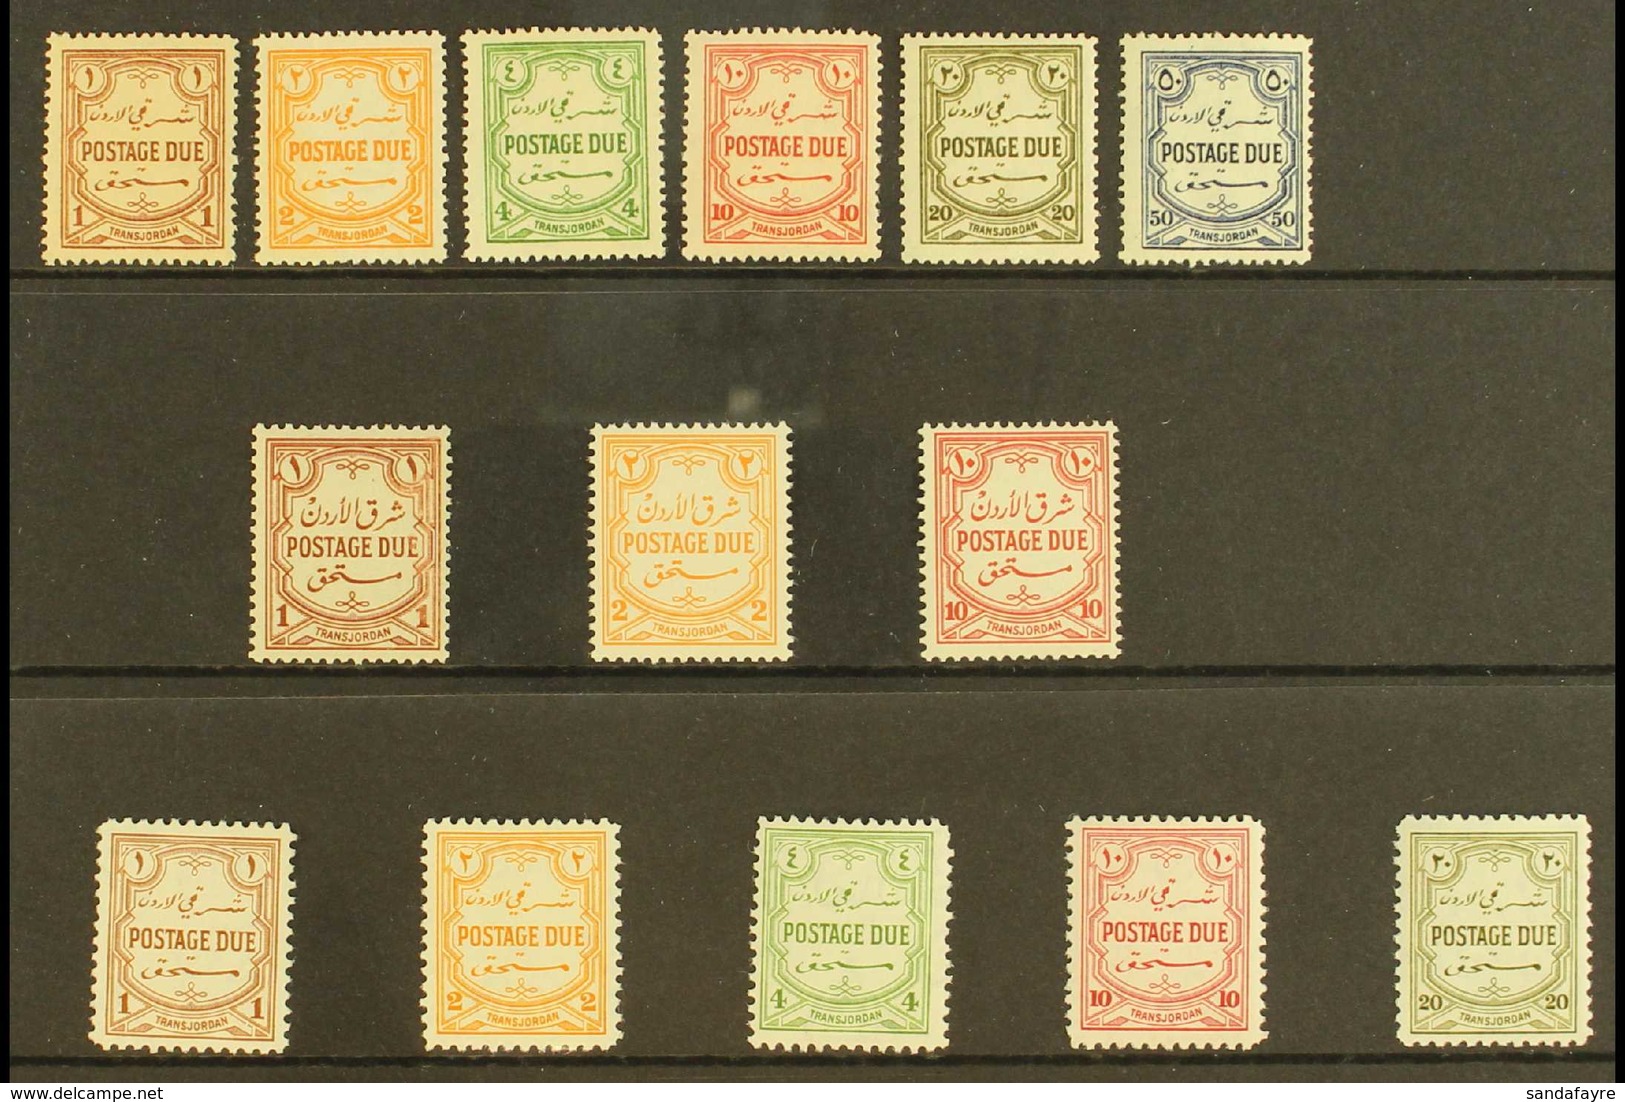 POSTAGE DUE  1929-49 MINT COLLECTION. A Complete Run From 1929-49, SG D189/94, SG D230/32 & SG D244/48, A Fine Mint Grou - Jordan